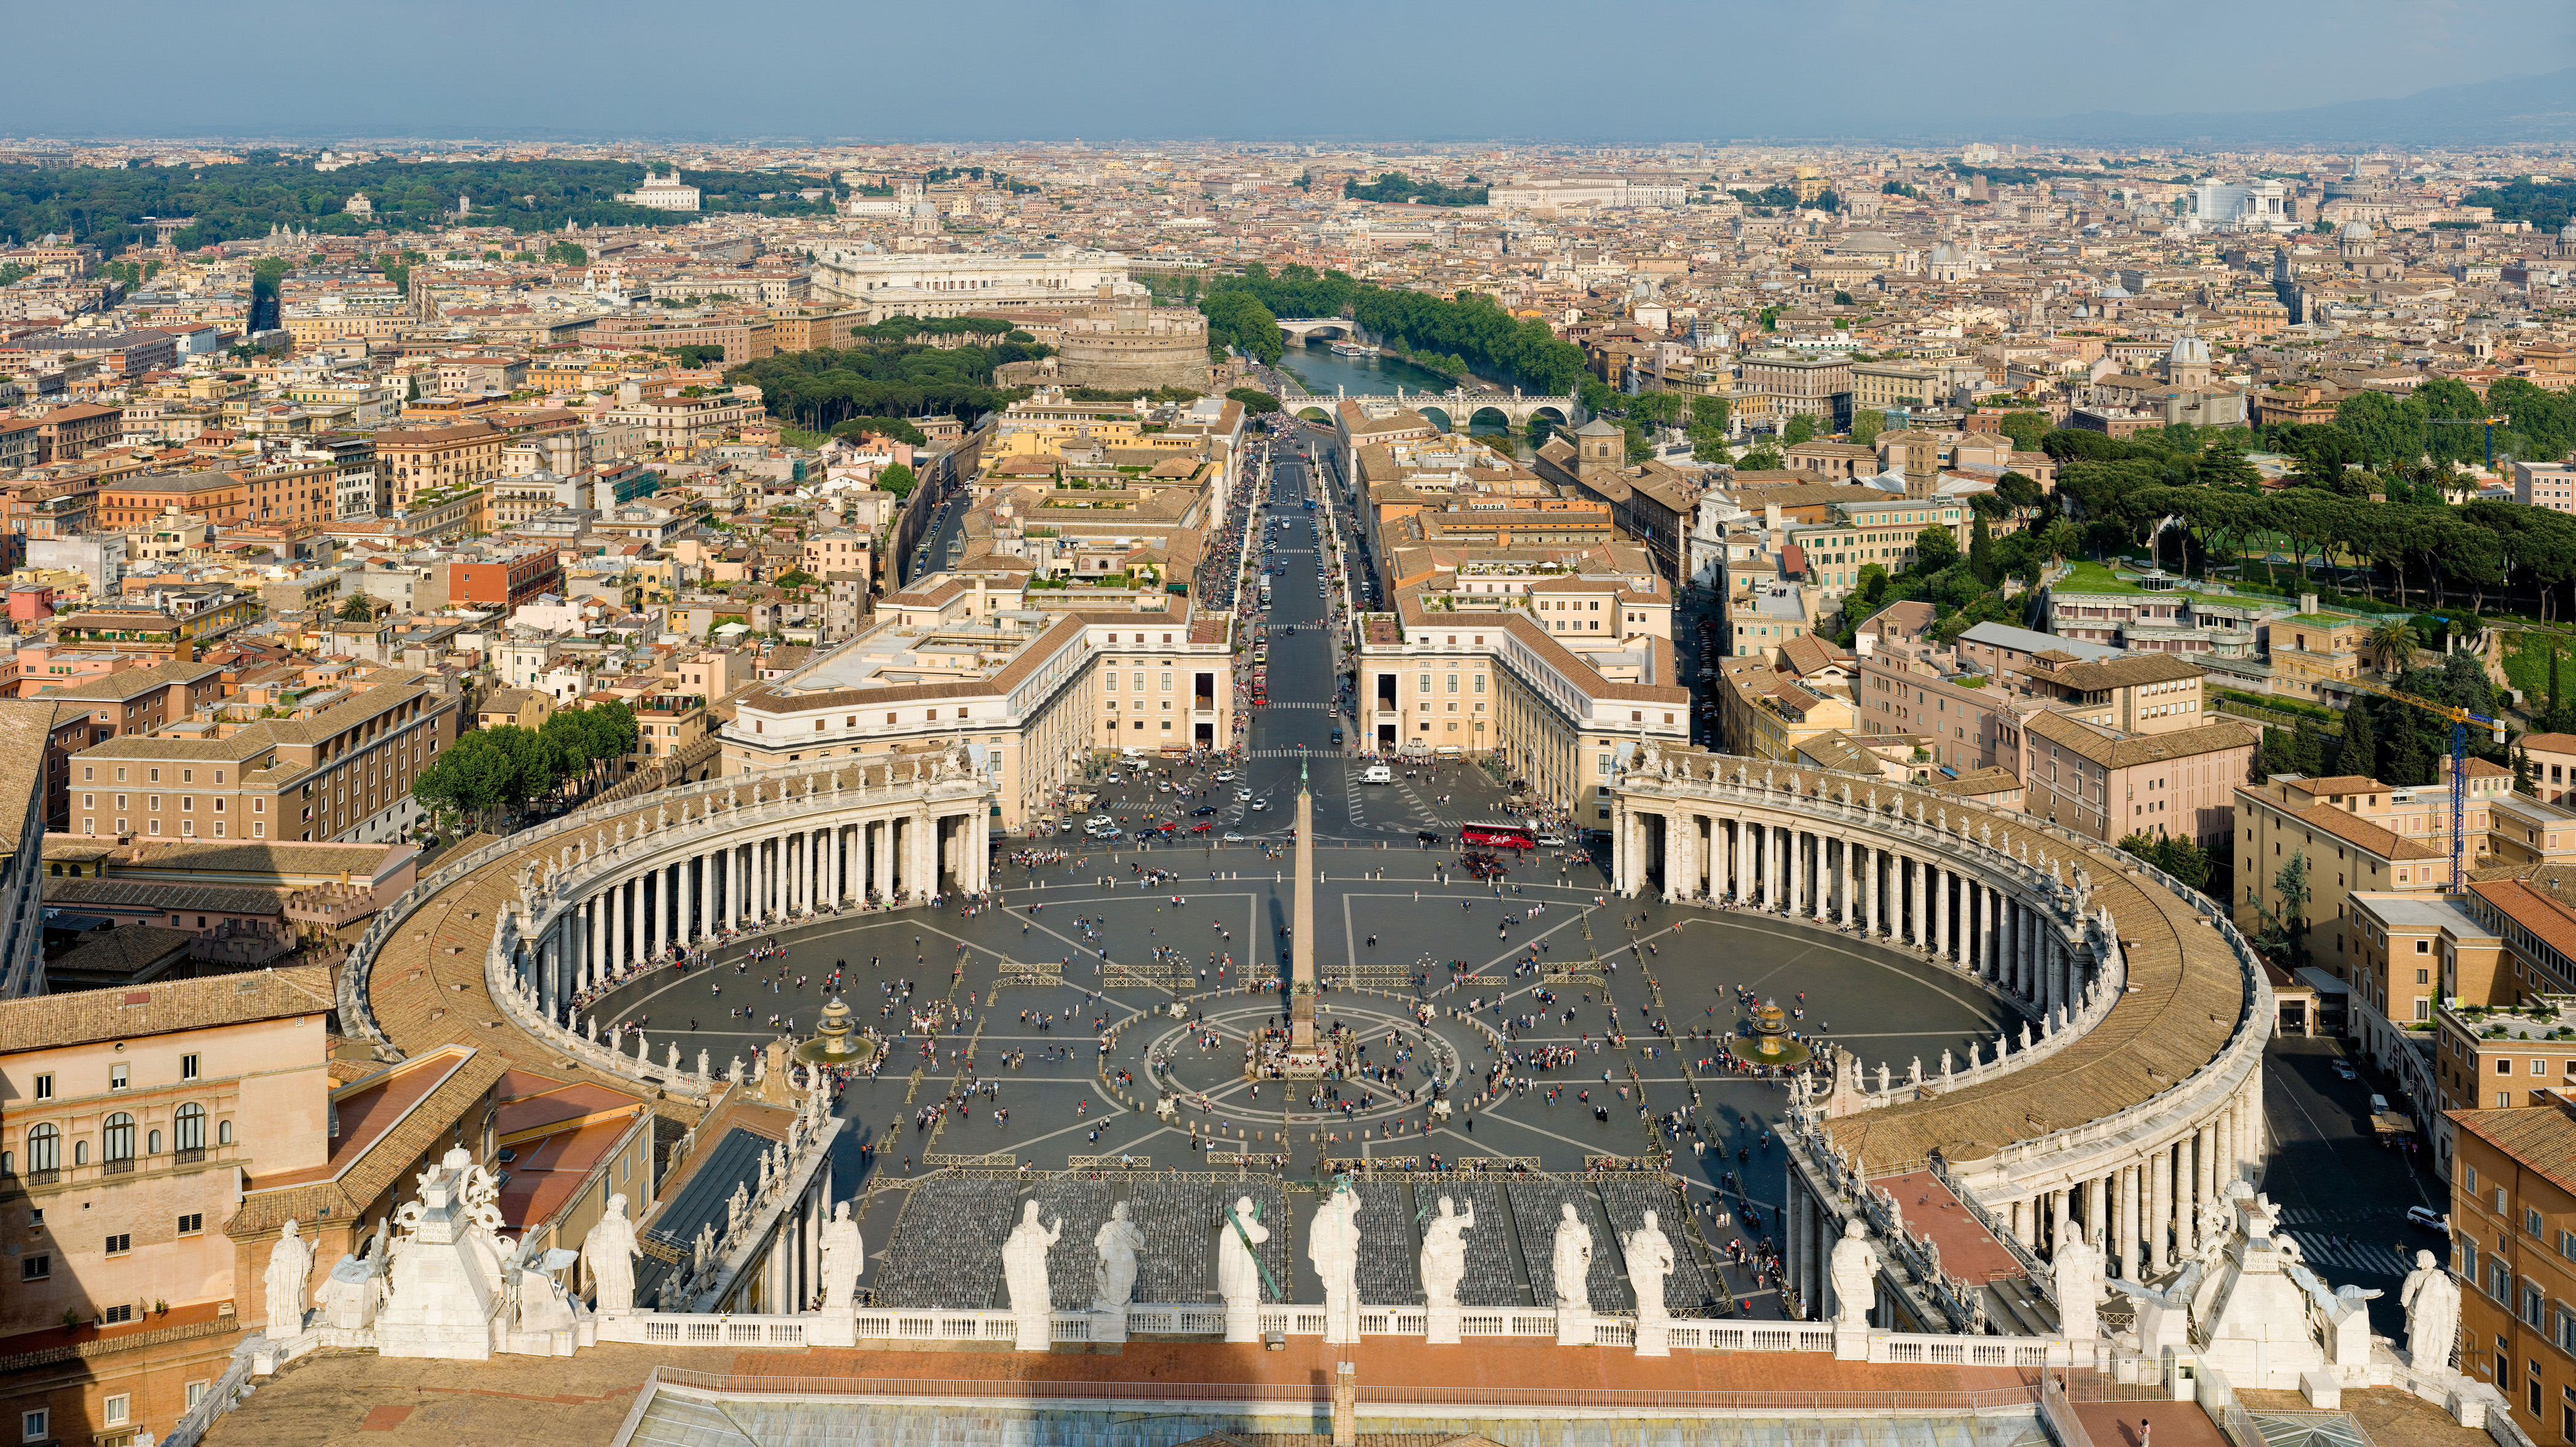 St. Peter's Basilica - Wikipedia